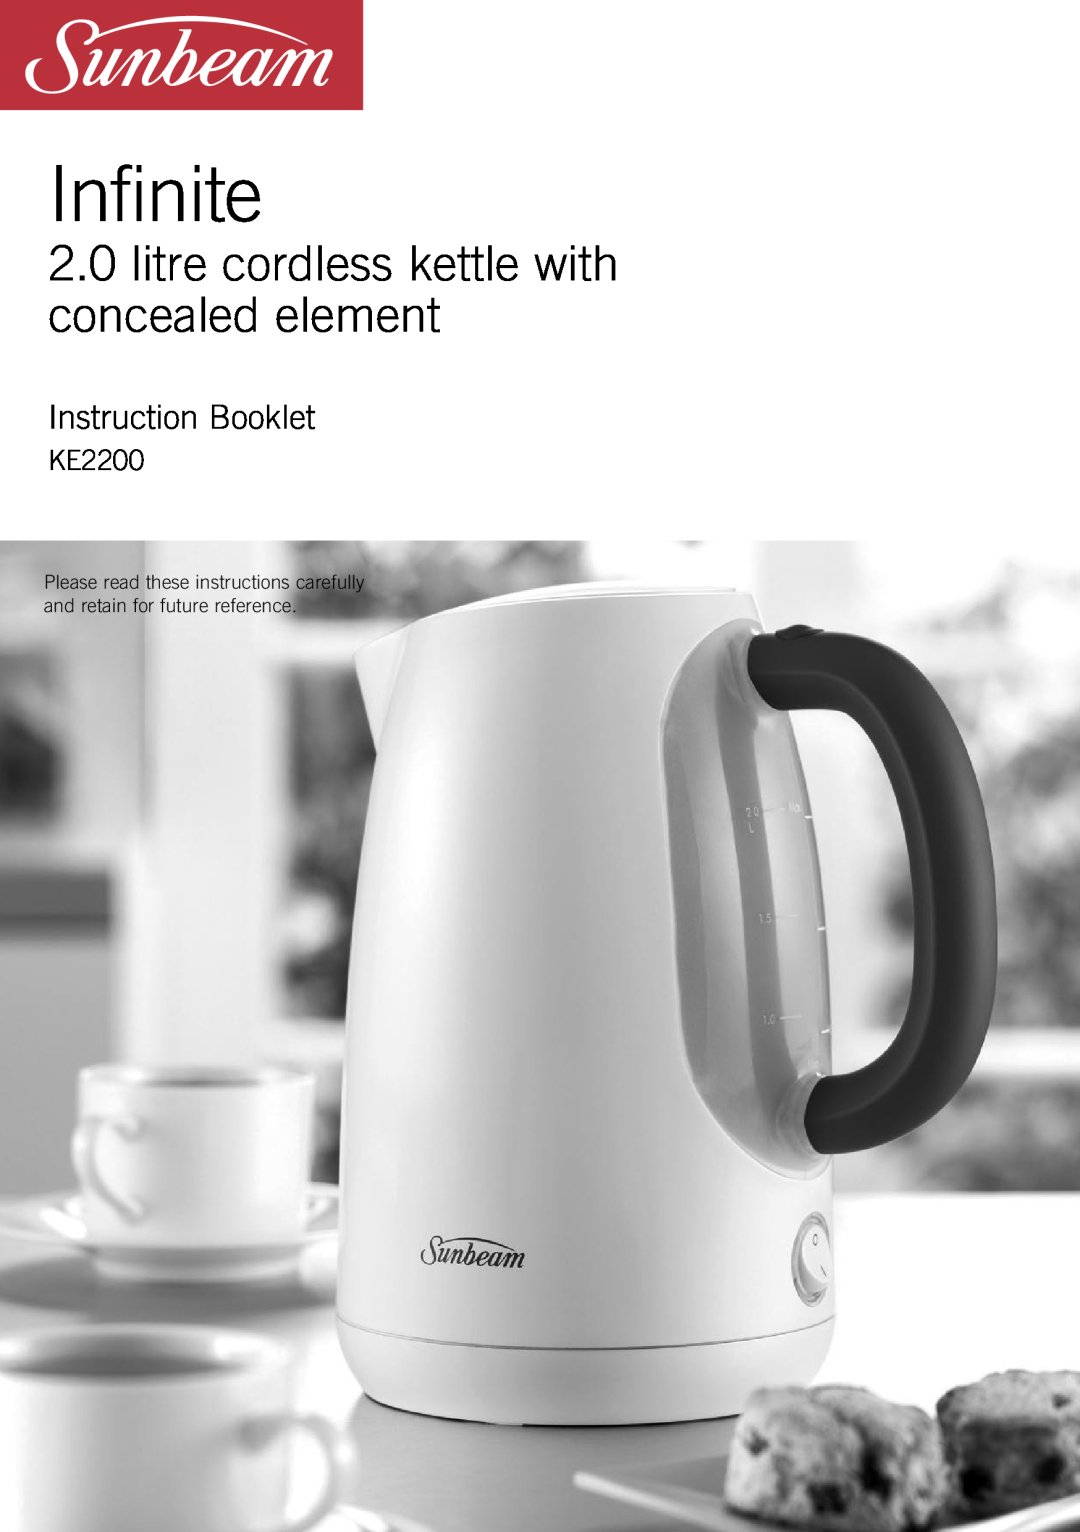 Sunbeam KE2200 manual Infinite, 2.0litre cordless kettle with concealed element, Instruction Booklet 